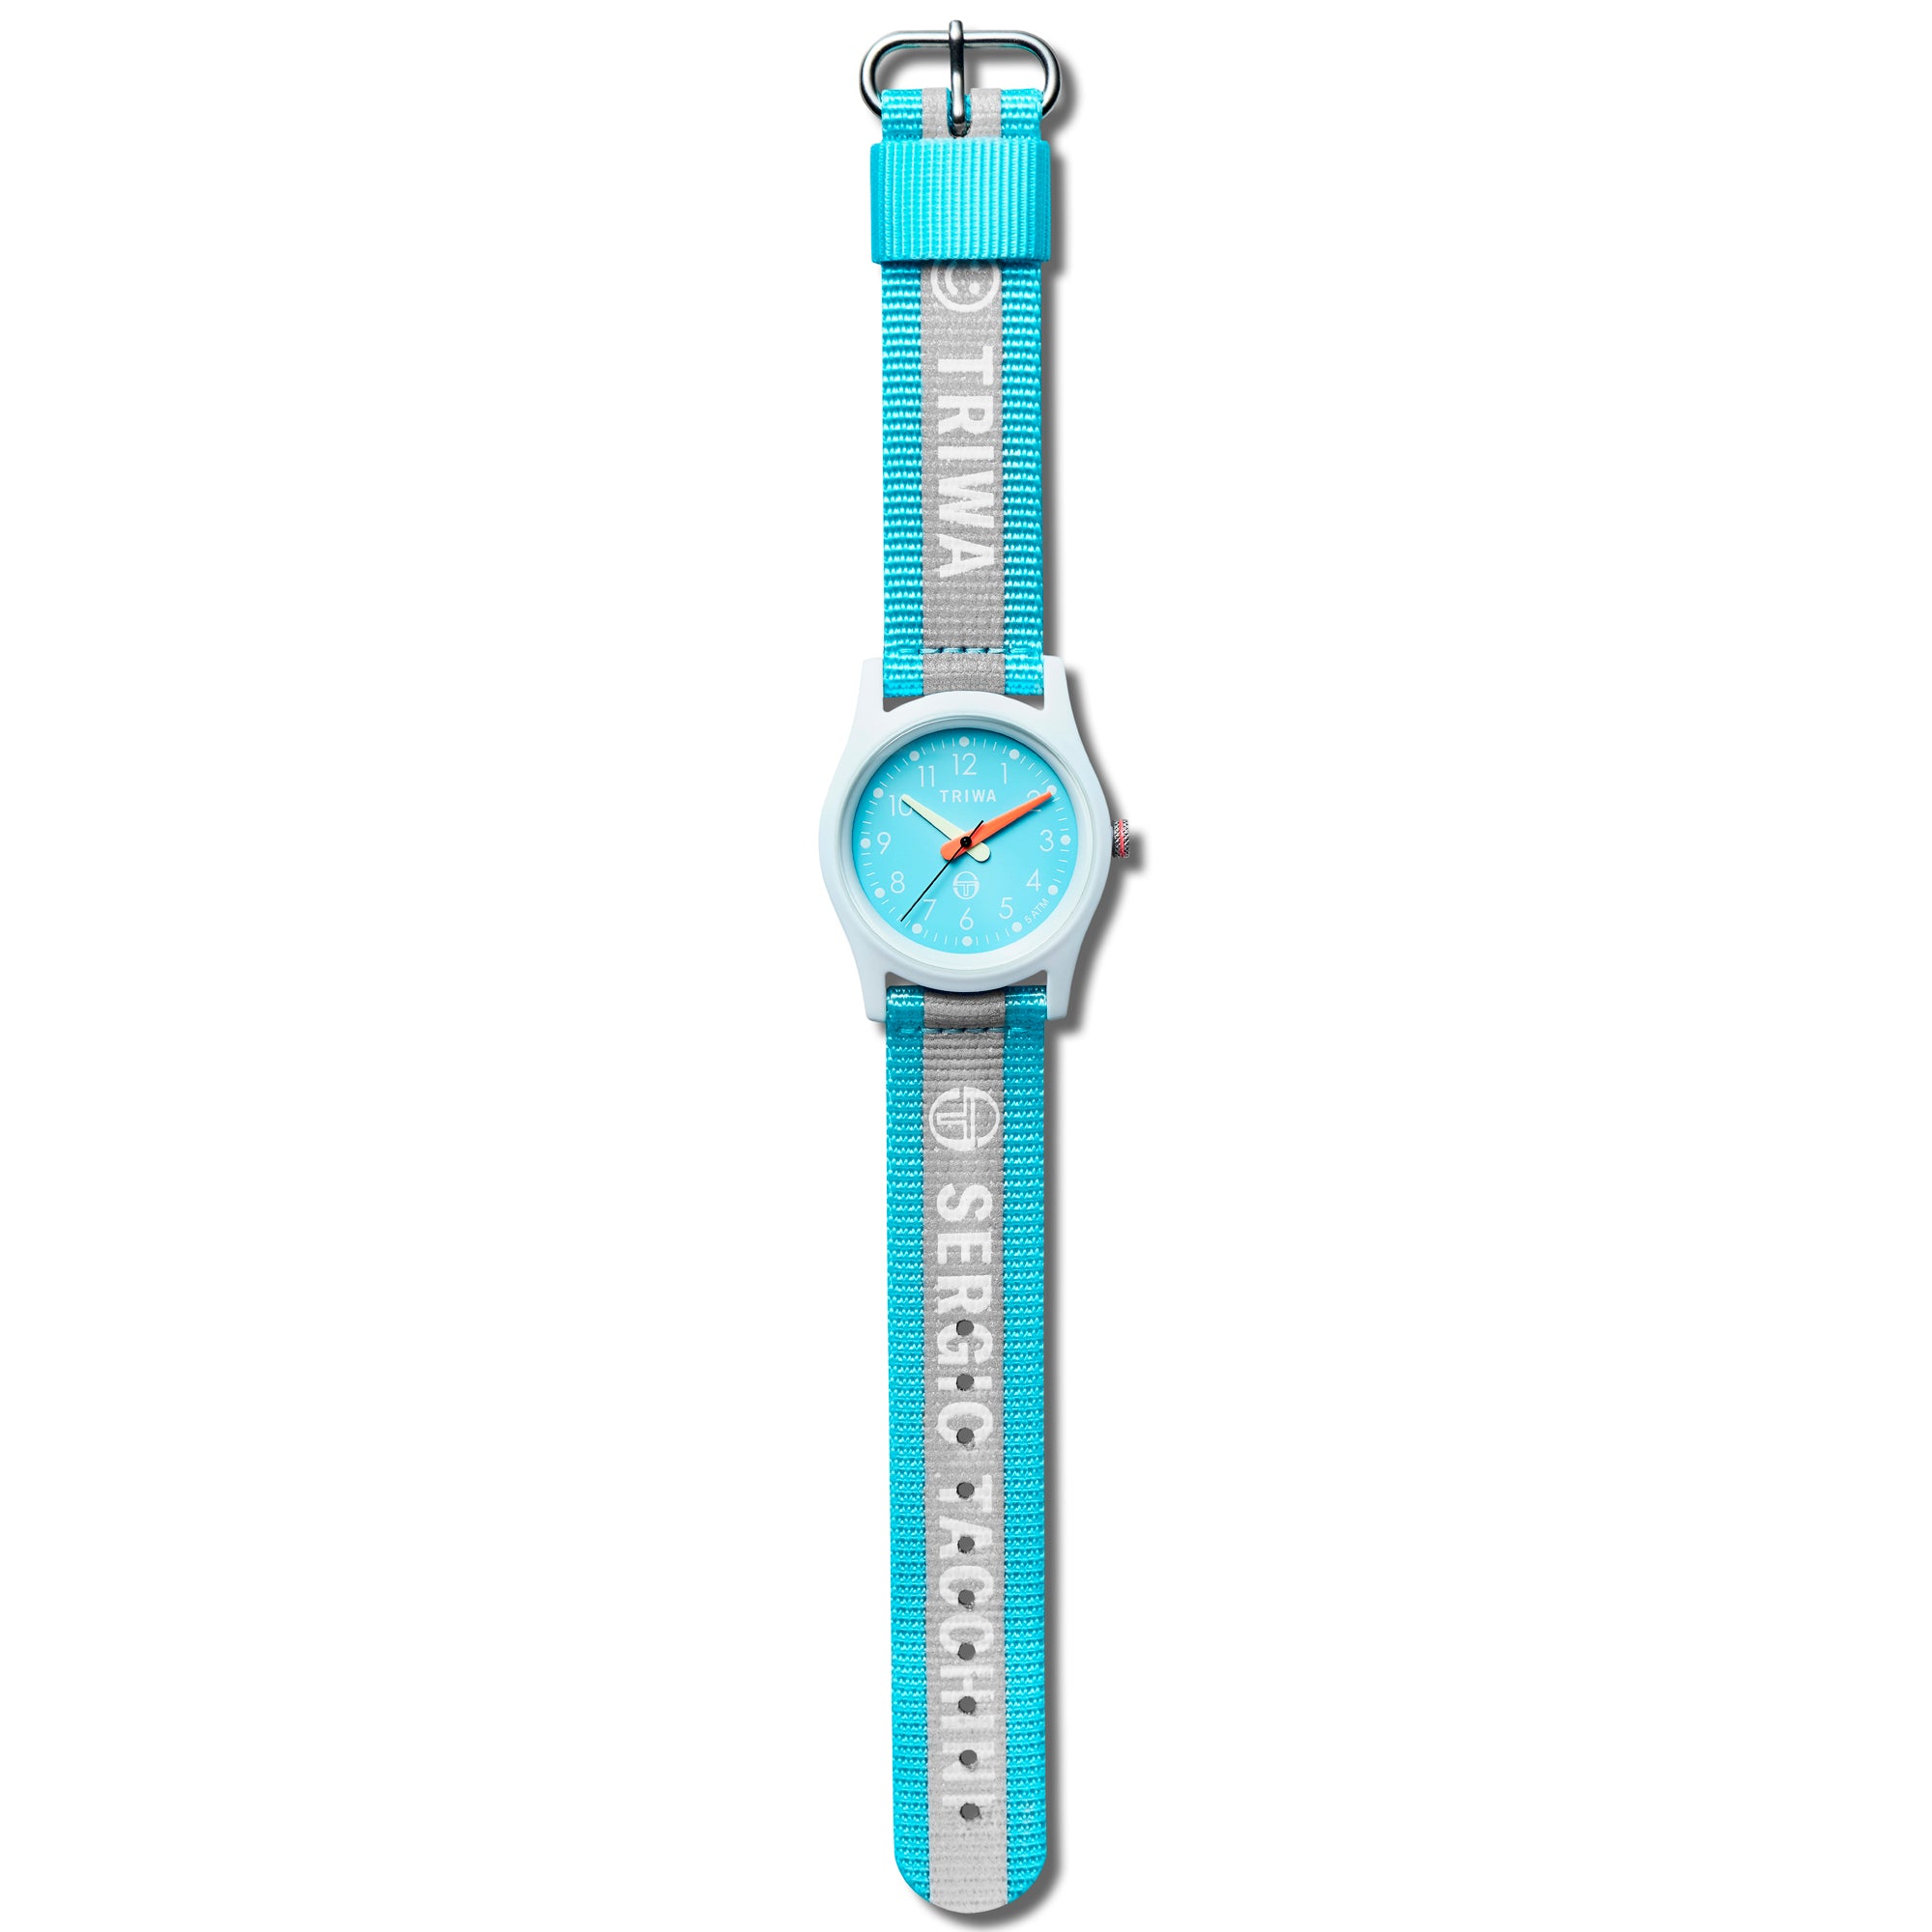 Triwa 'Time for Sports' Sergio Tacchini Aqua Wrist Watch - Limited Edition